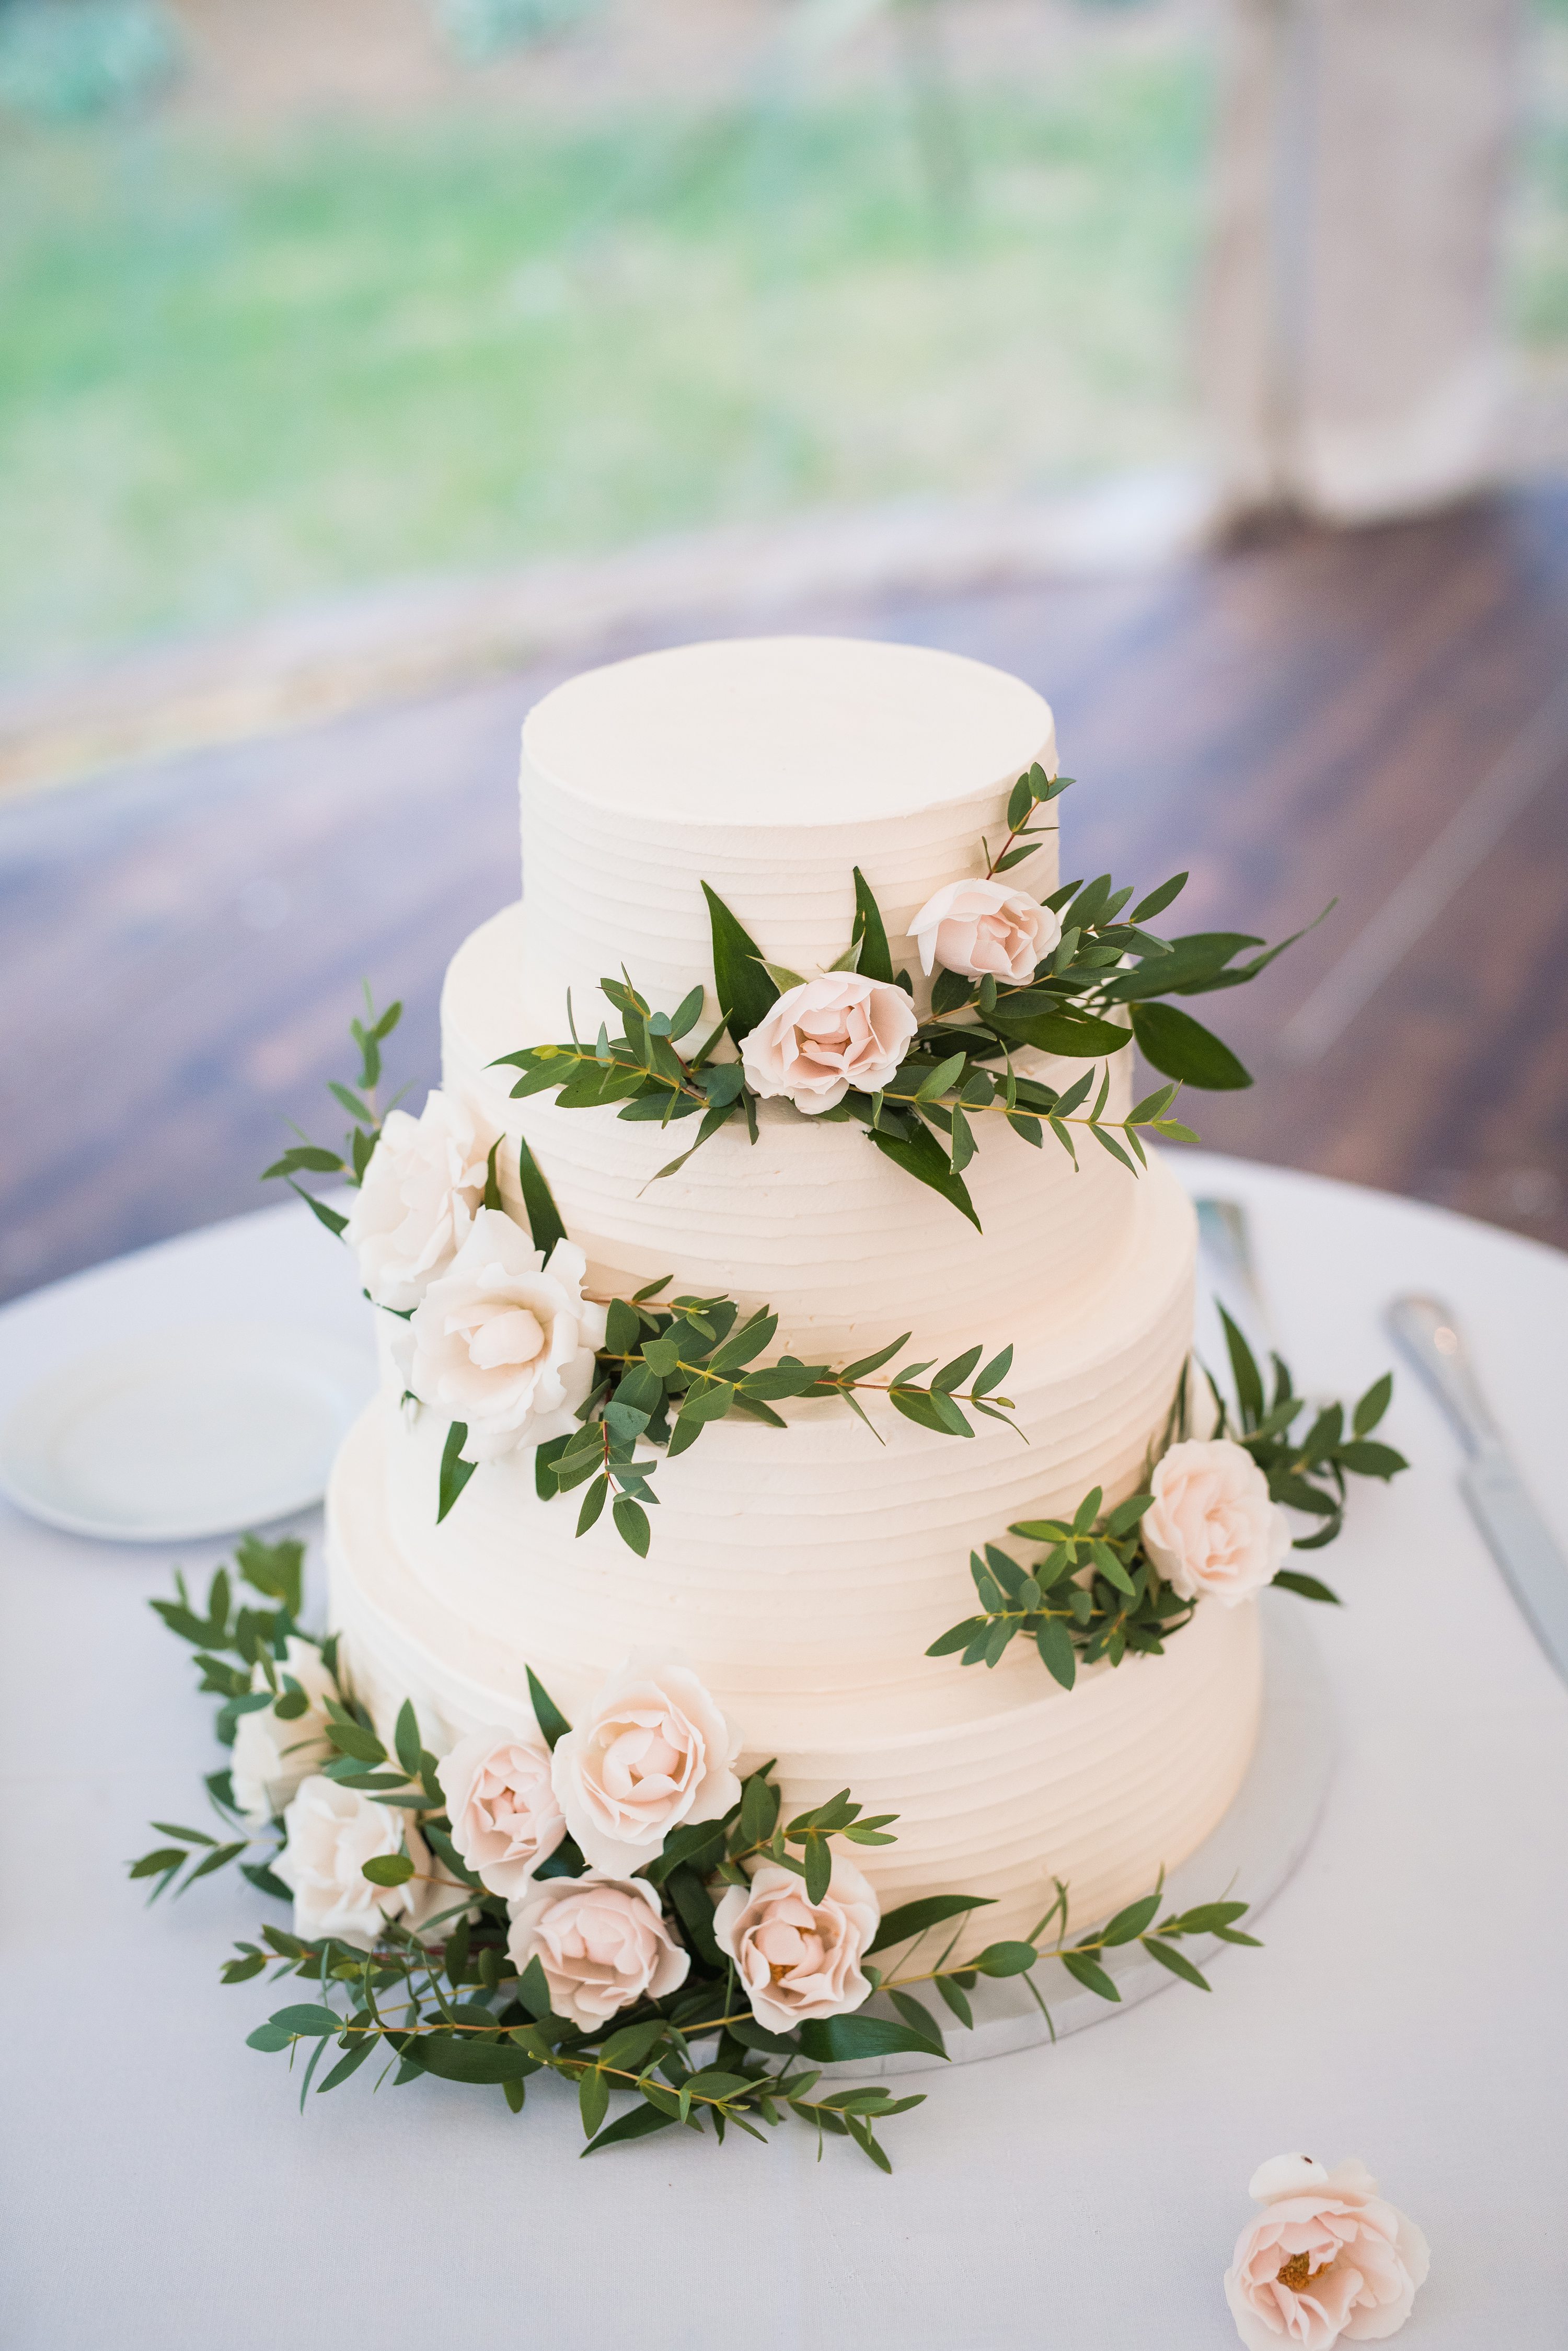 Sony wedding photographer,Natural wedding photography,wedding cake